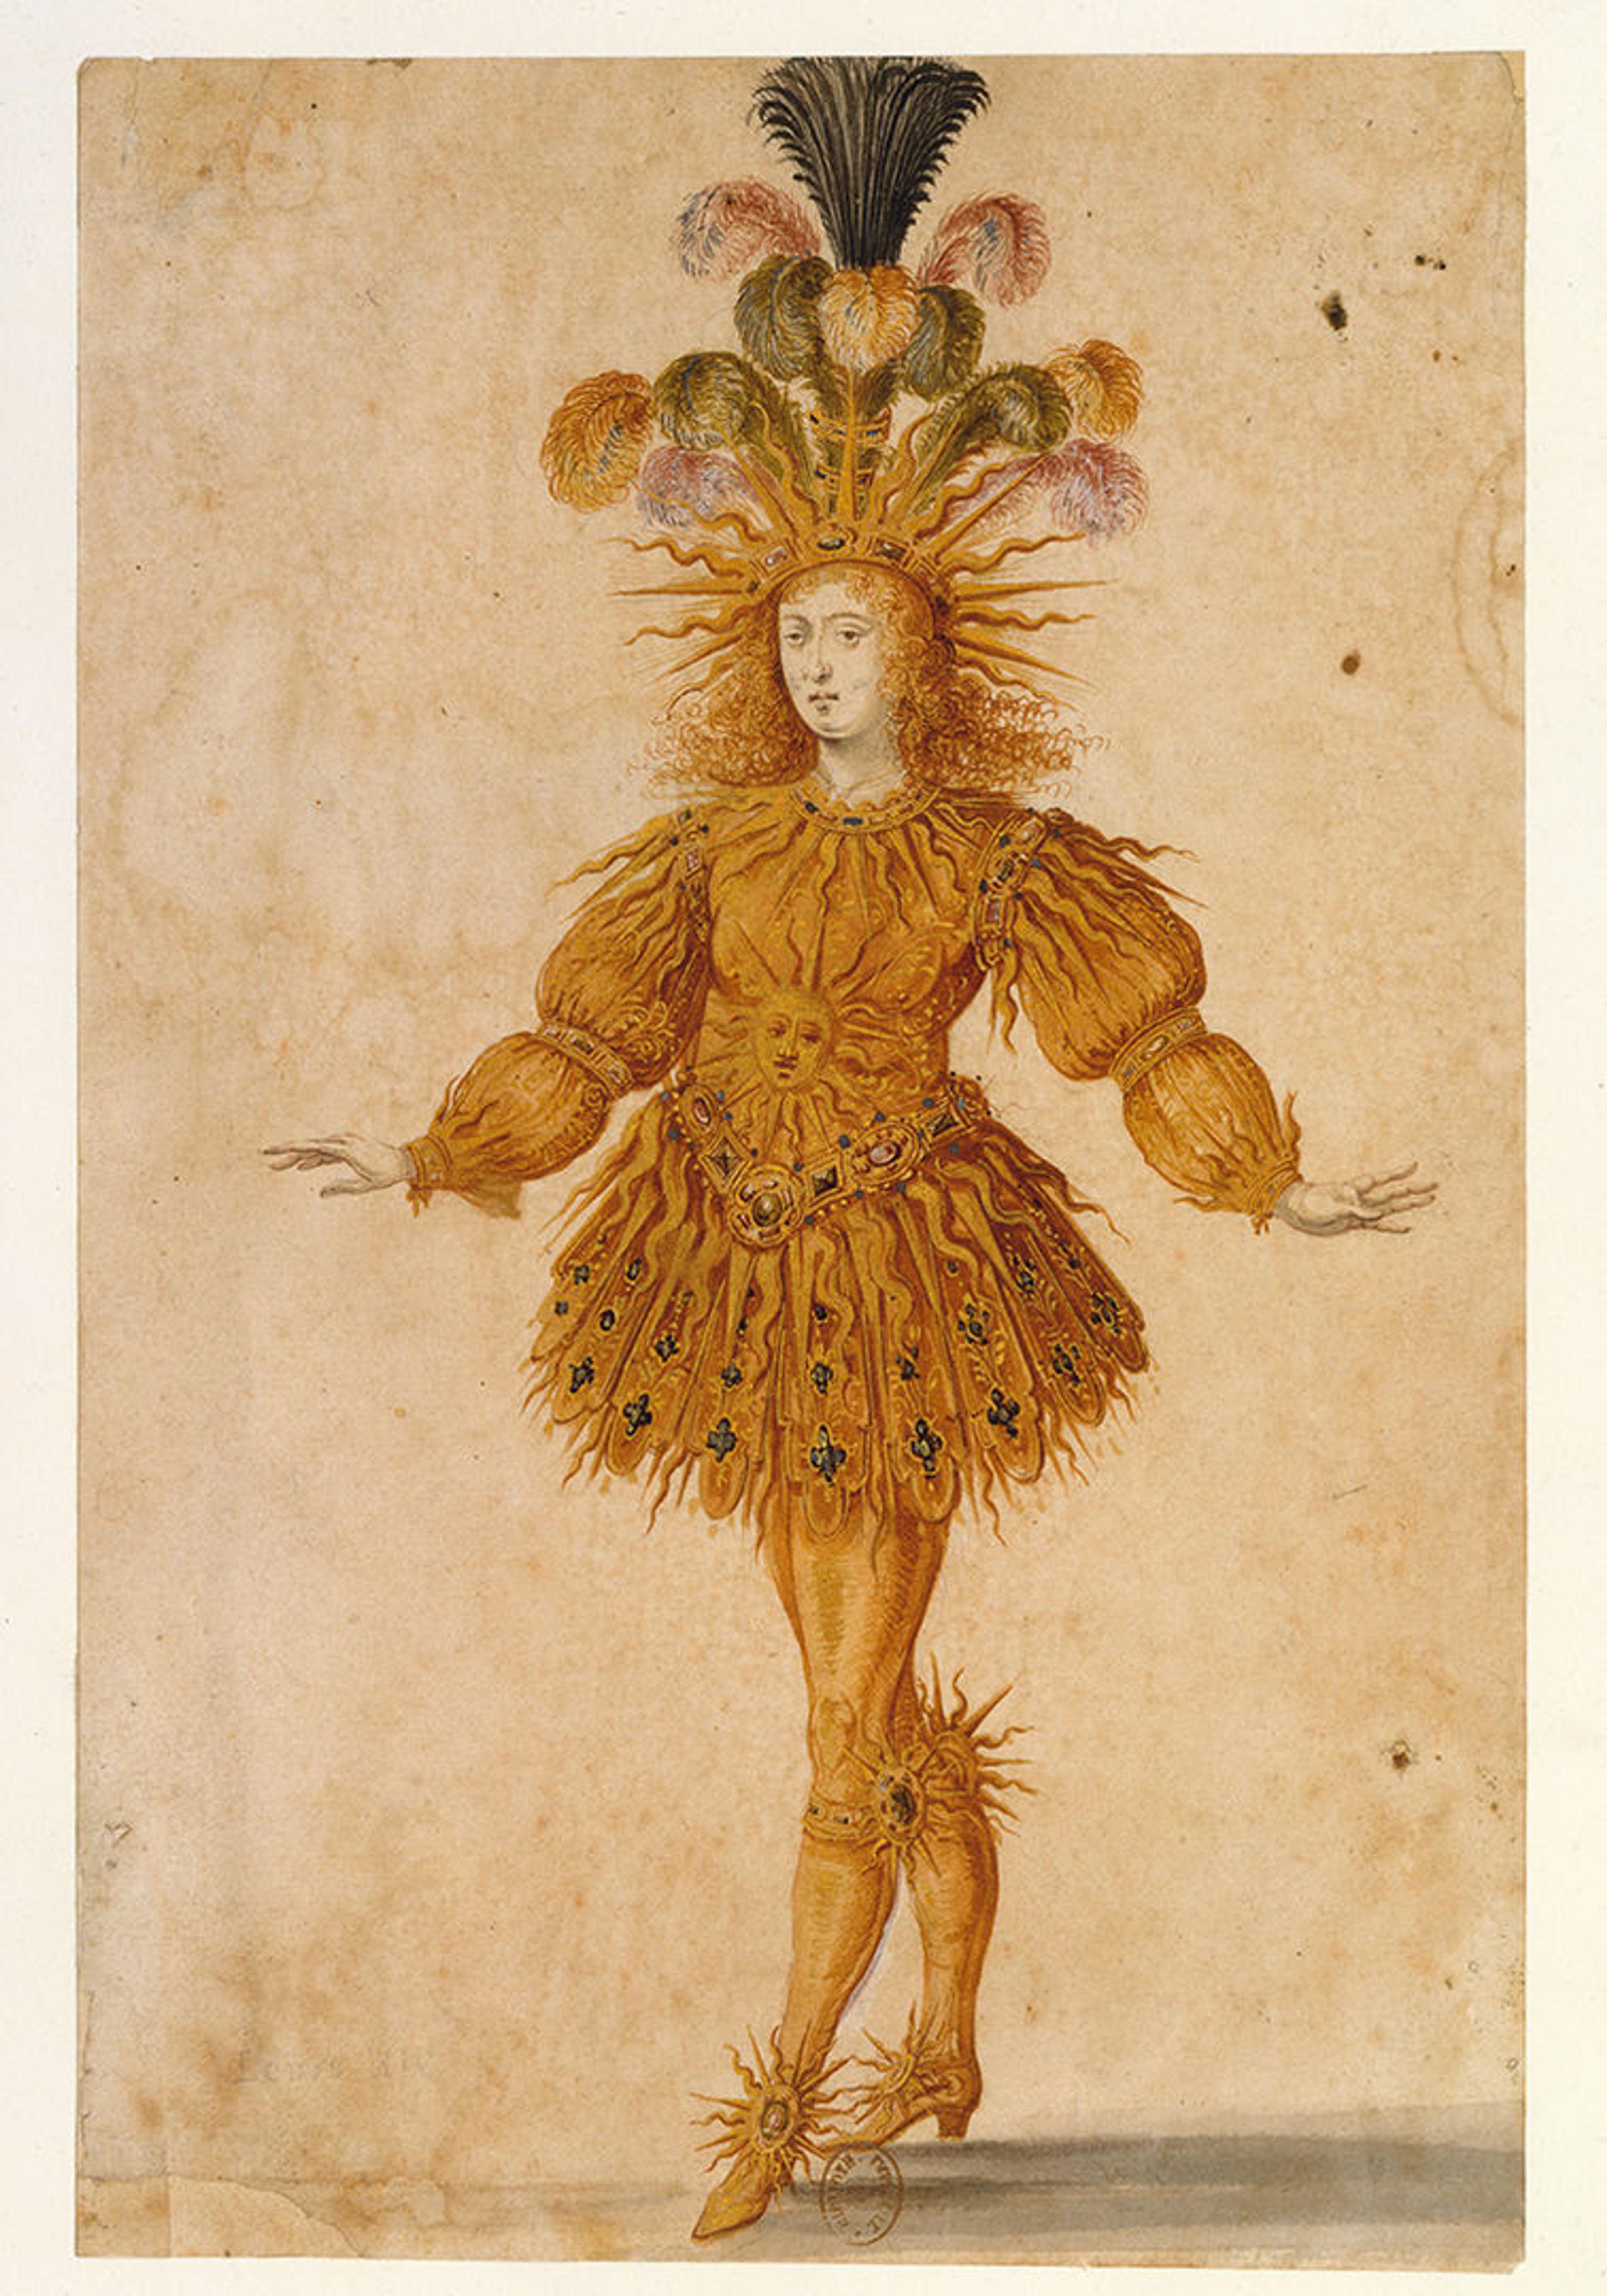 Louis XIV as Apollo "The Sun King"